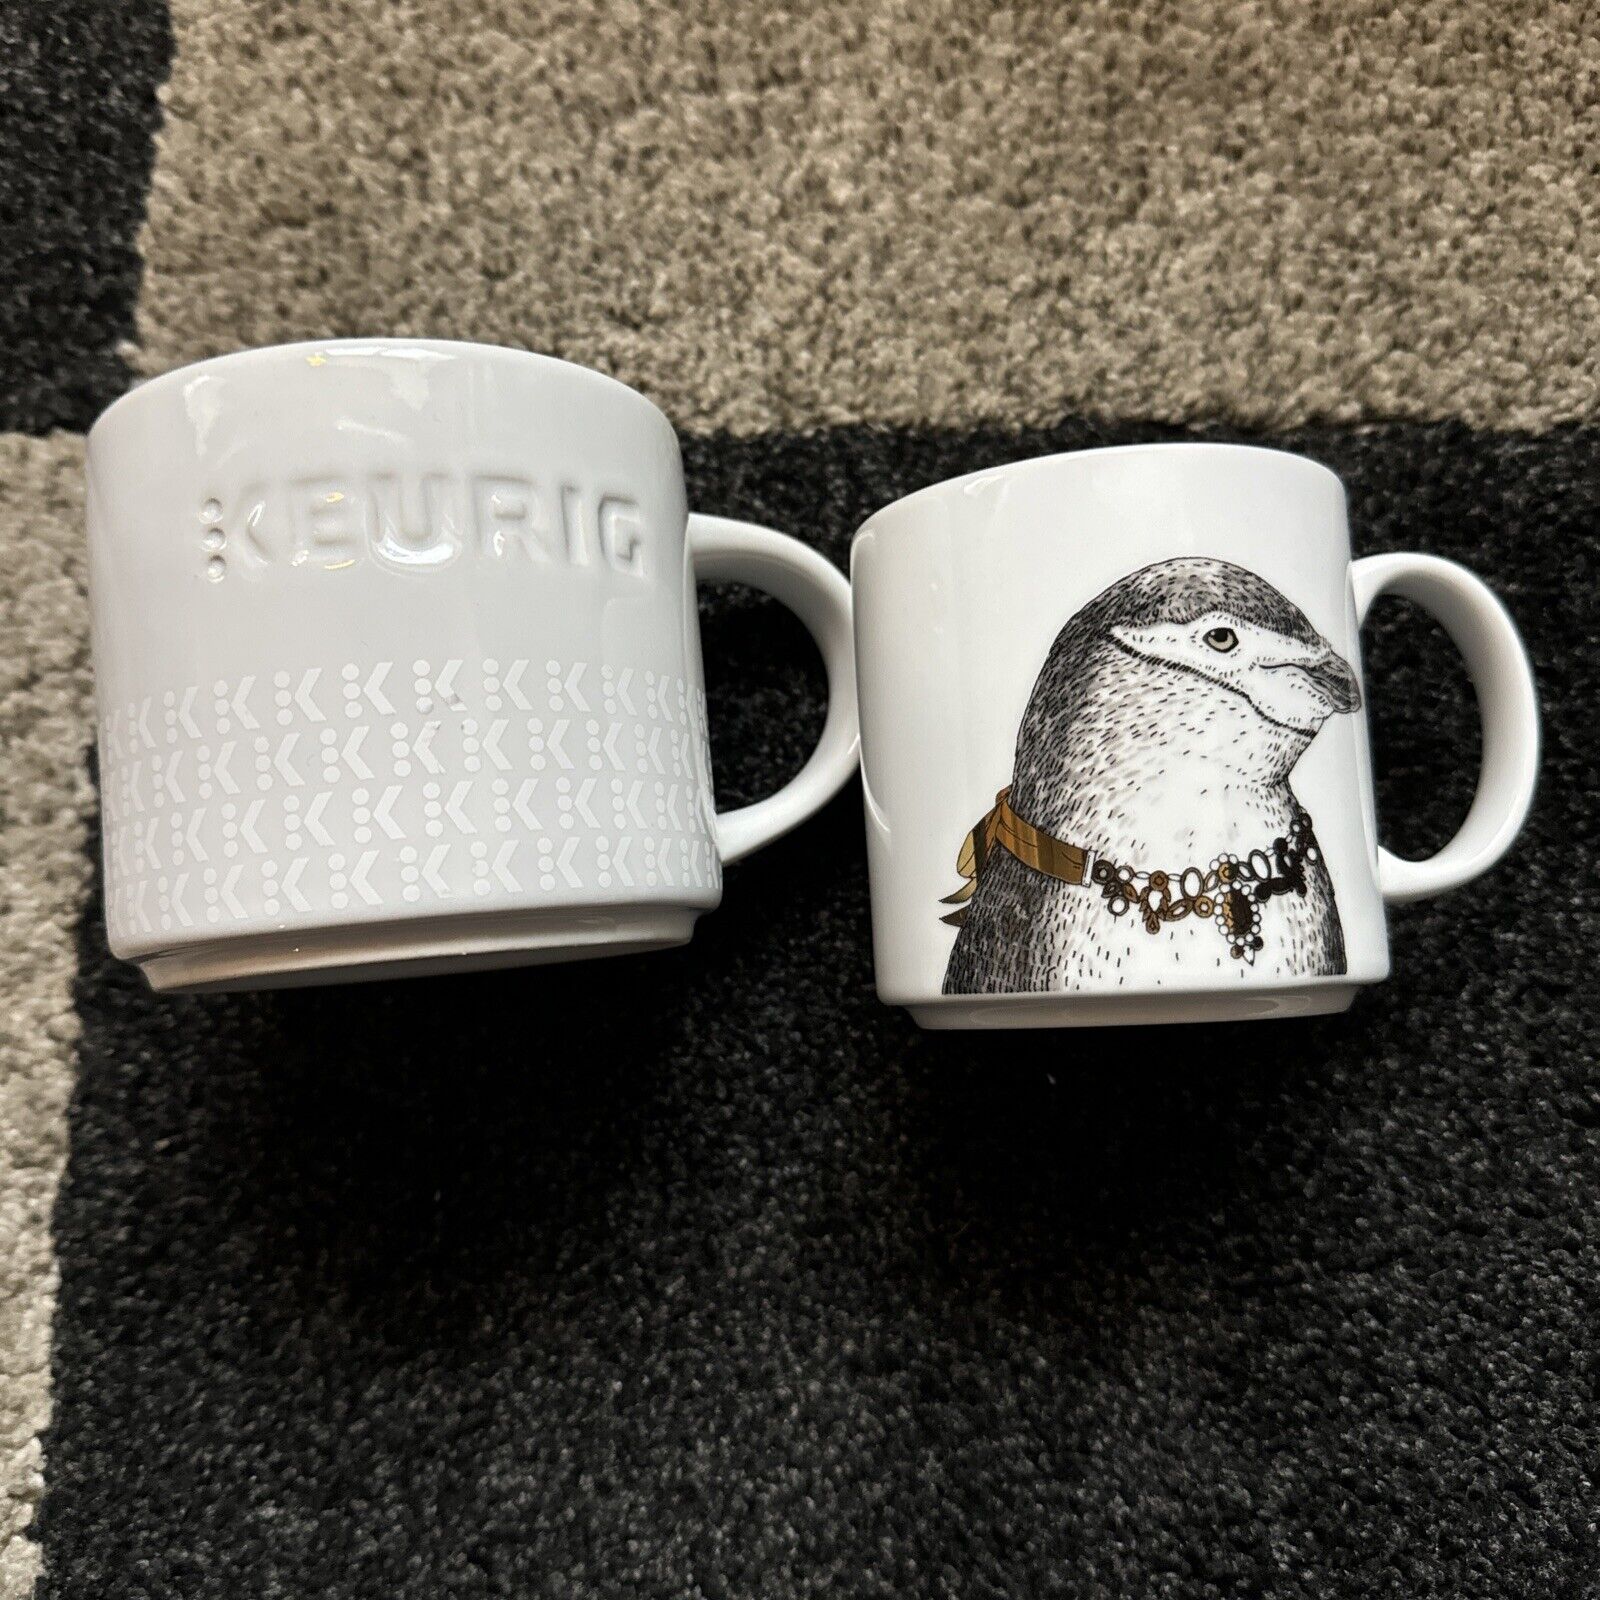 Keurig Signature Mug / Cup White Rare Find 10 Oz Set w/ Free West Elm Kozlowski